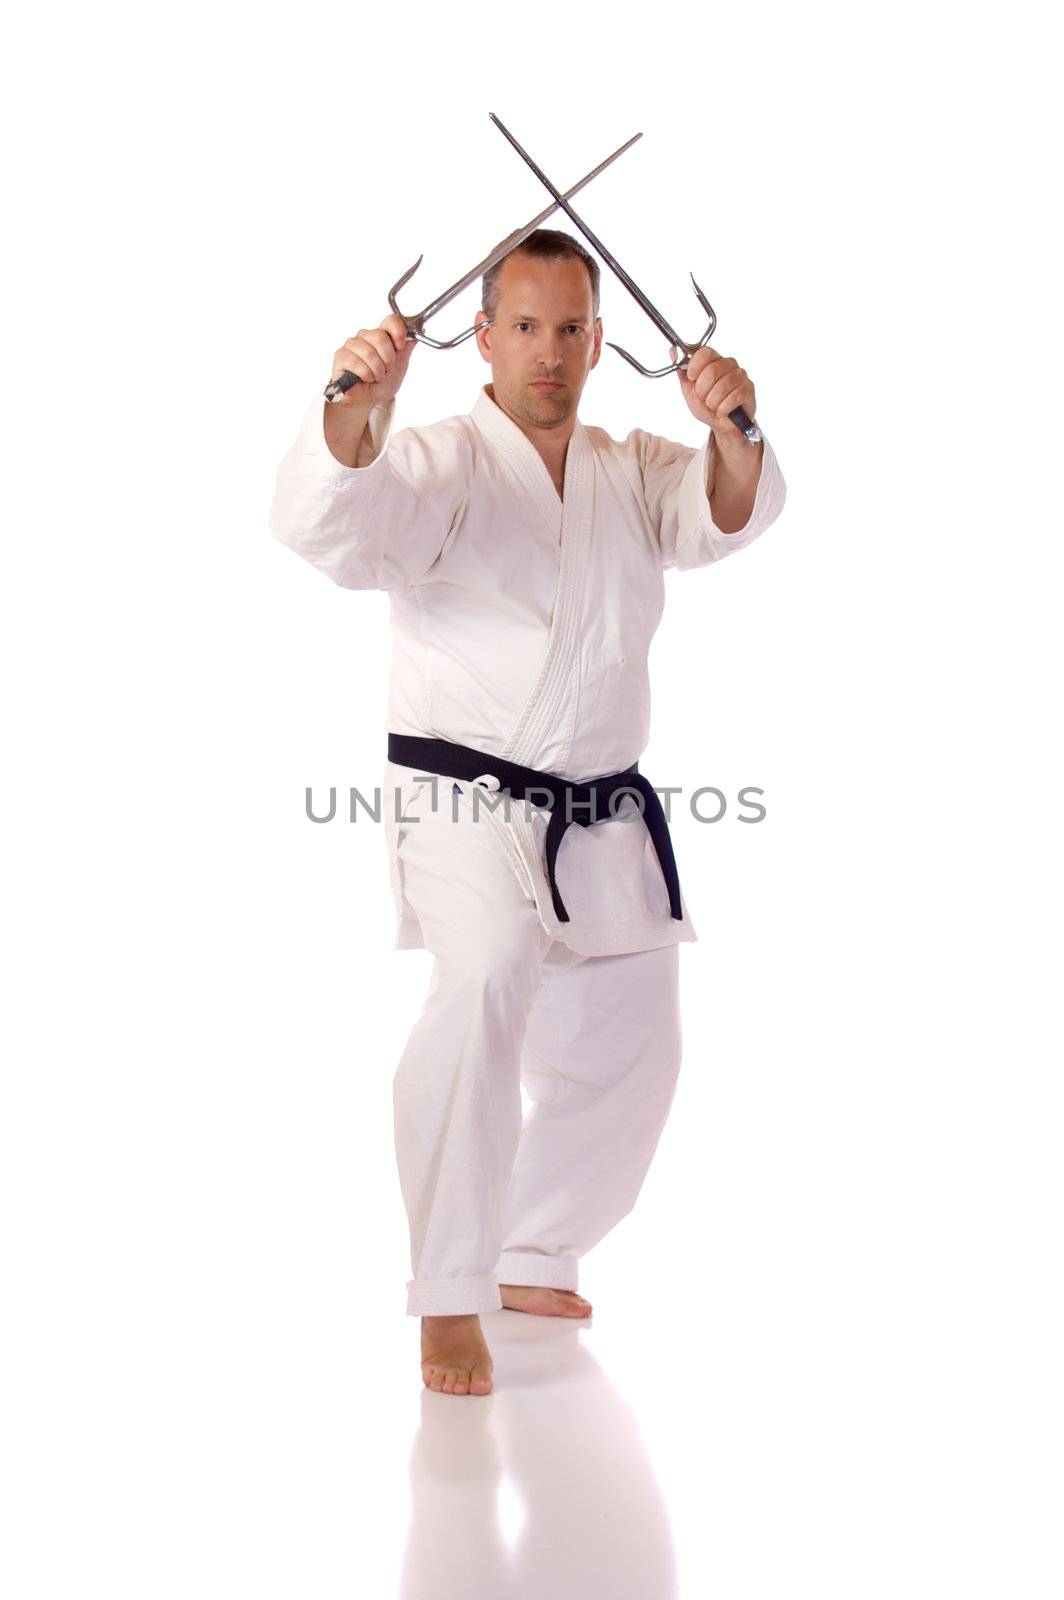 Man in karate-gi holding a pair of sai